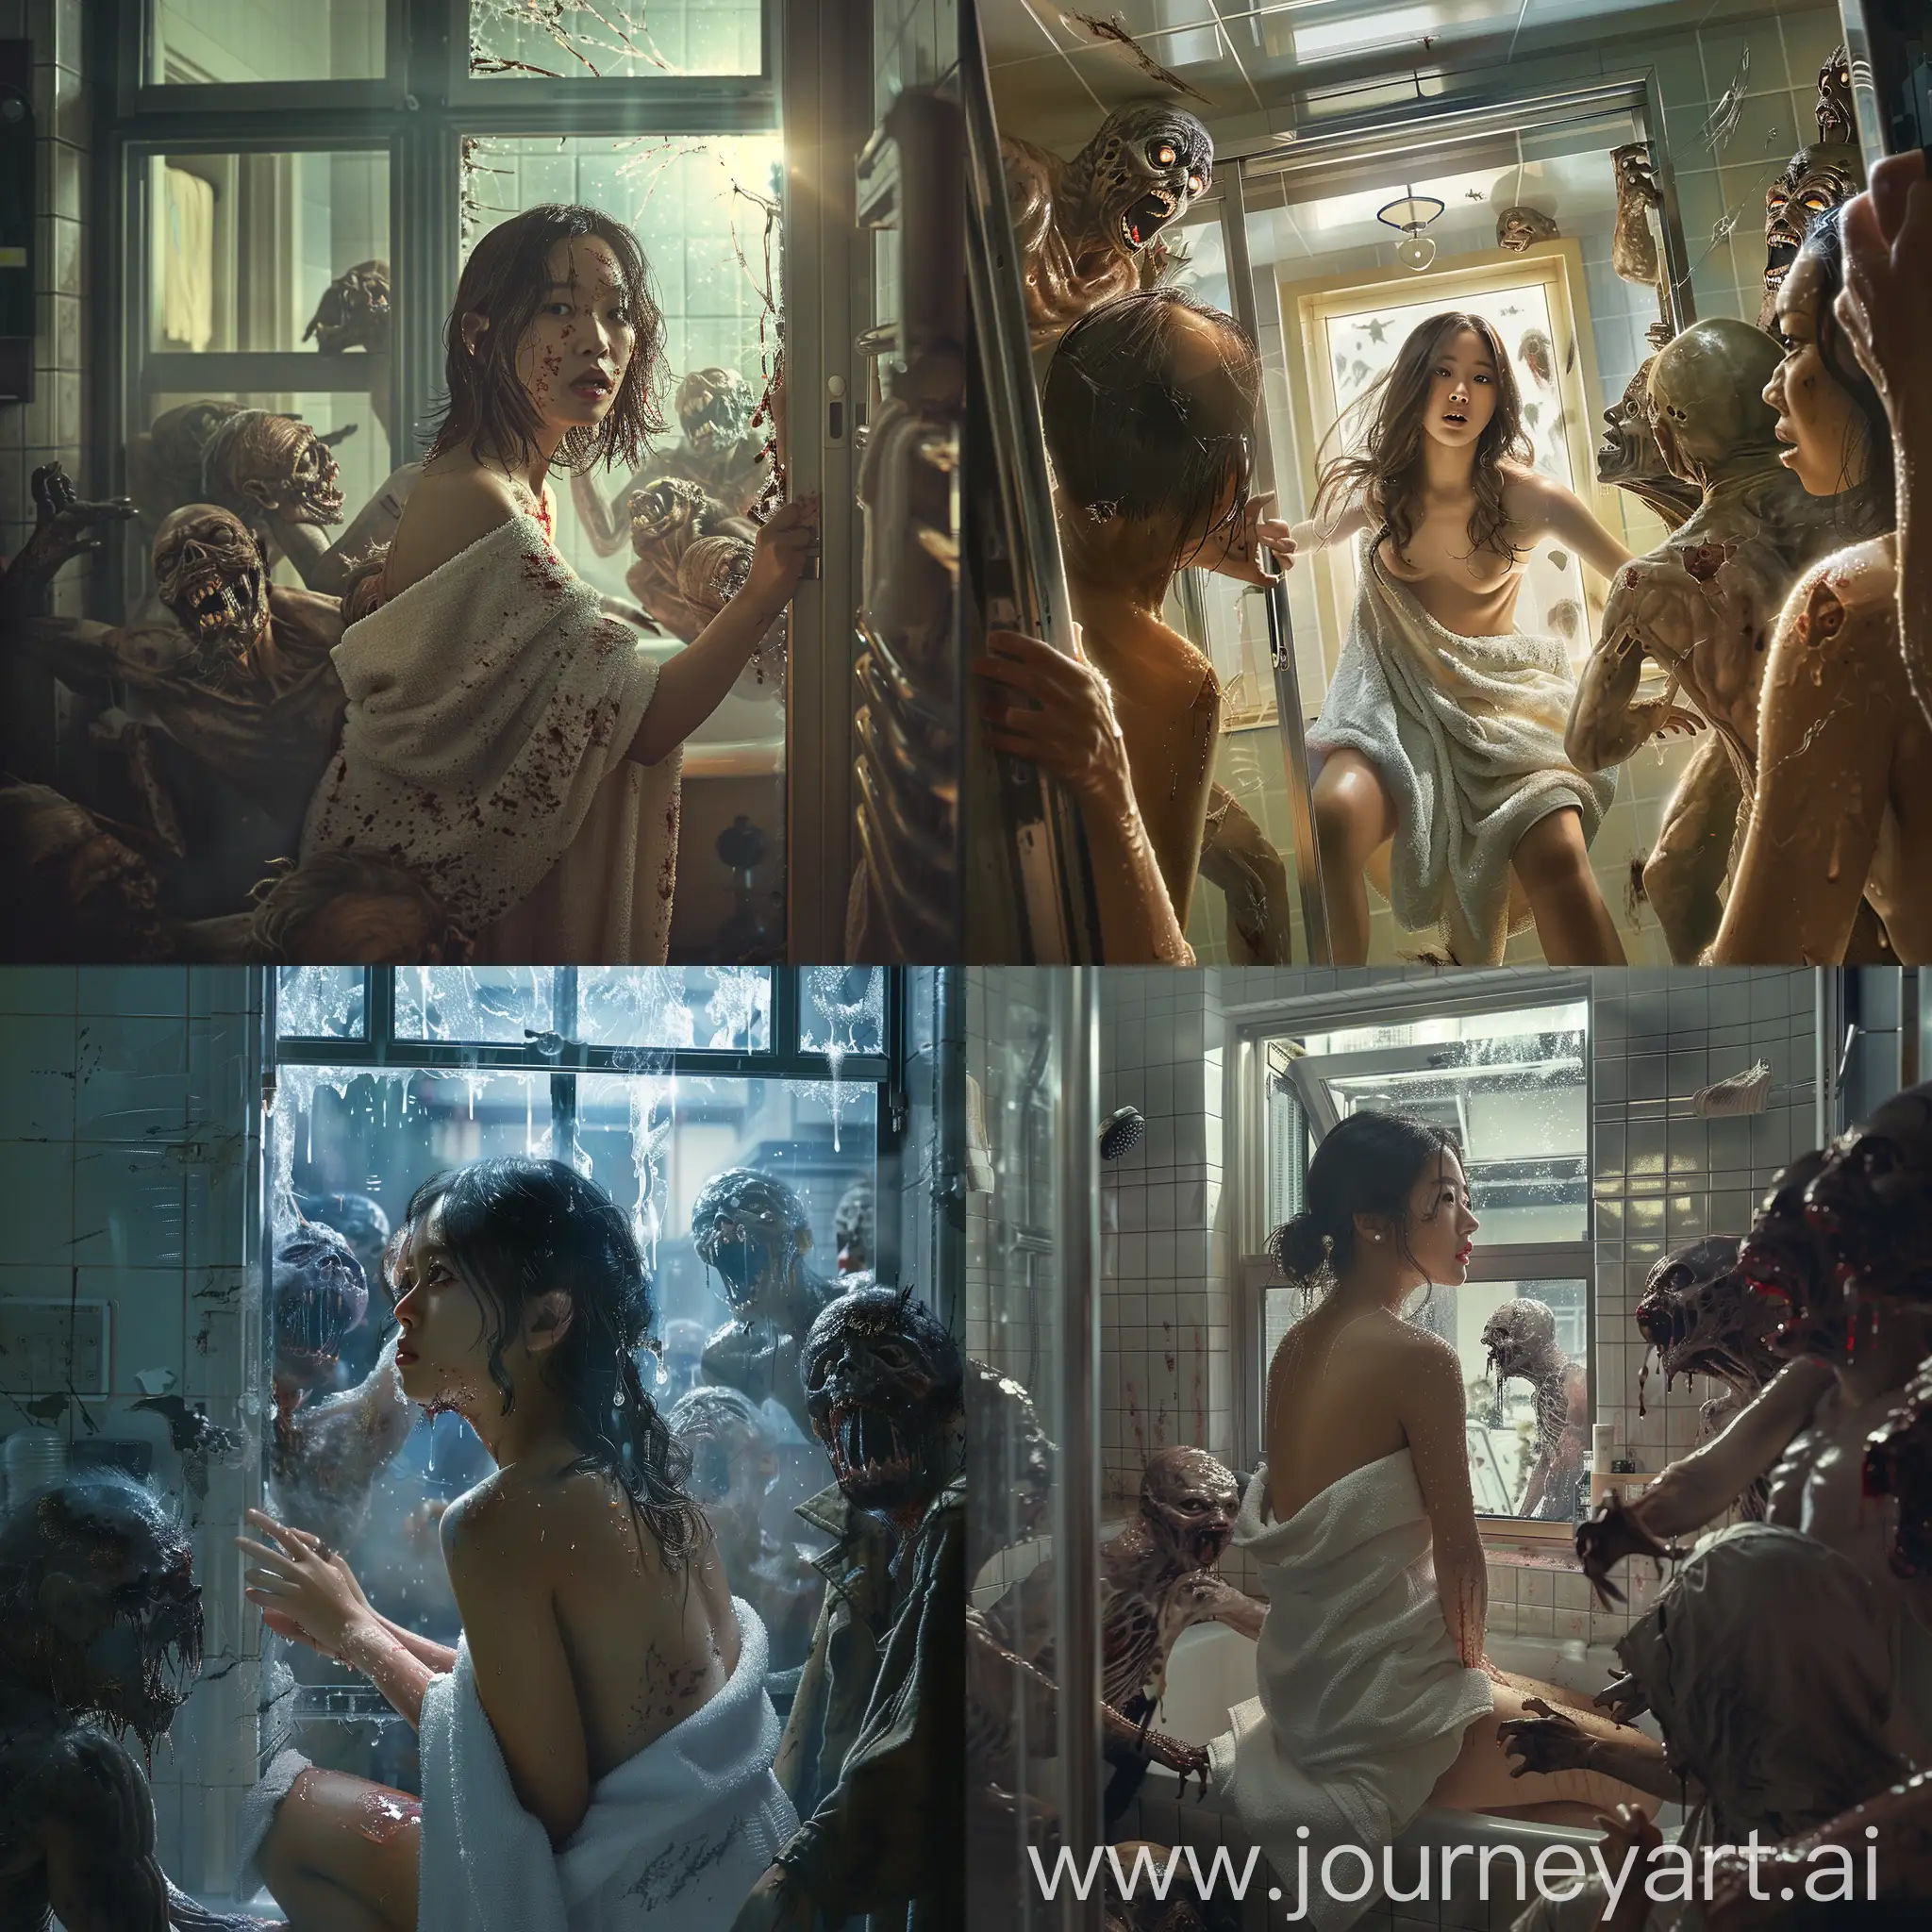 Korean-Woman-in-Towel-Fends-Off-Ghoul-Attack-in-Modern-Bathroom